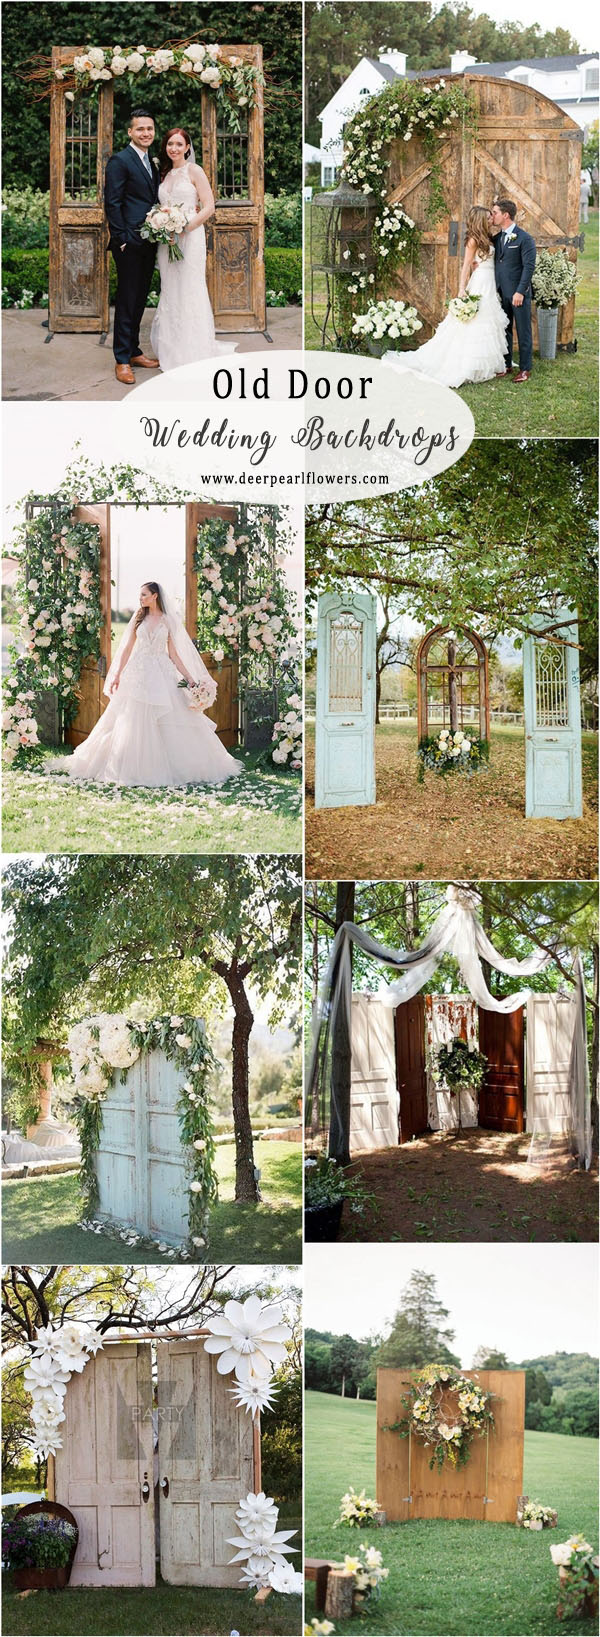 old door wedding backdrops